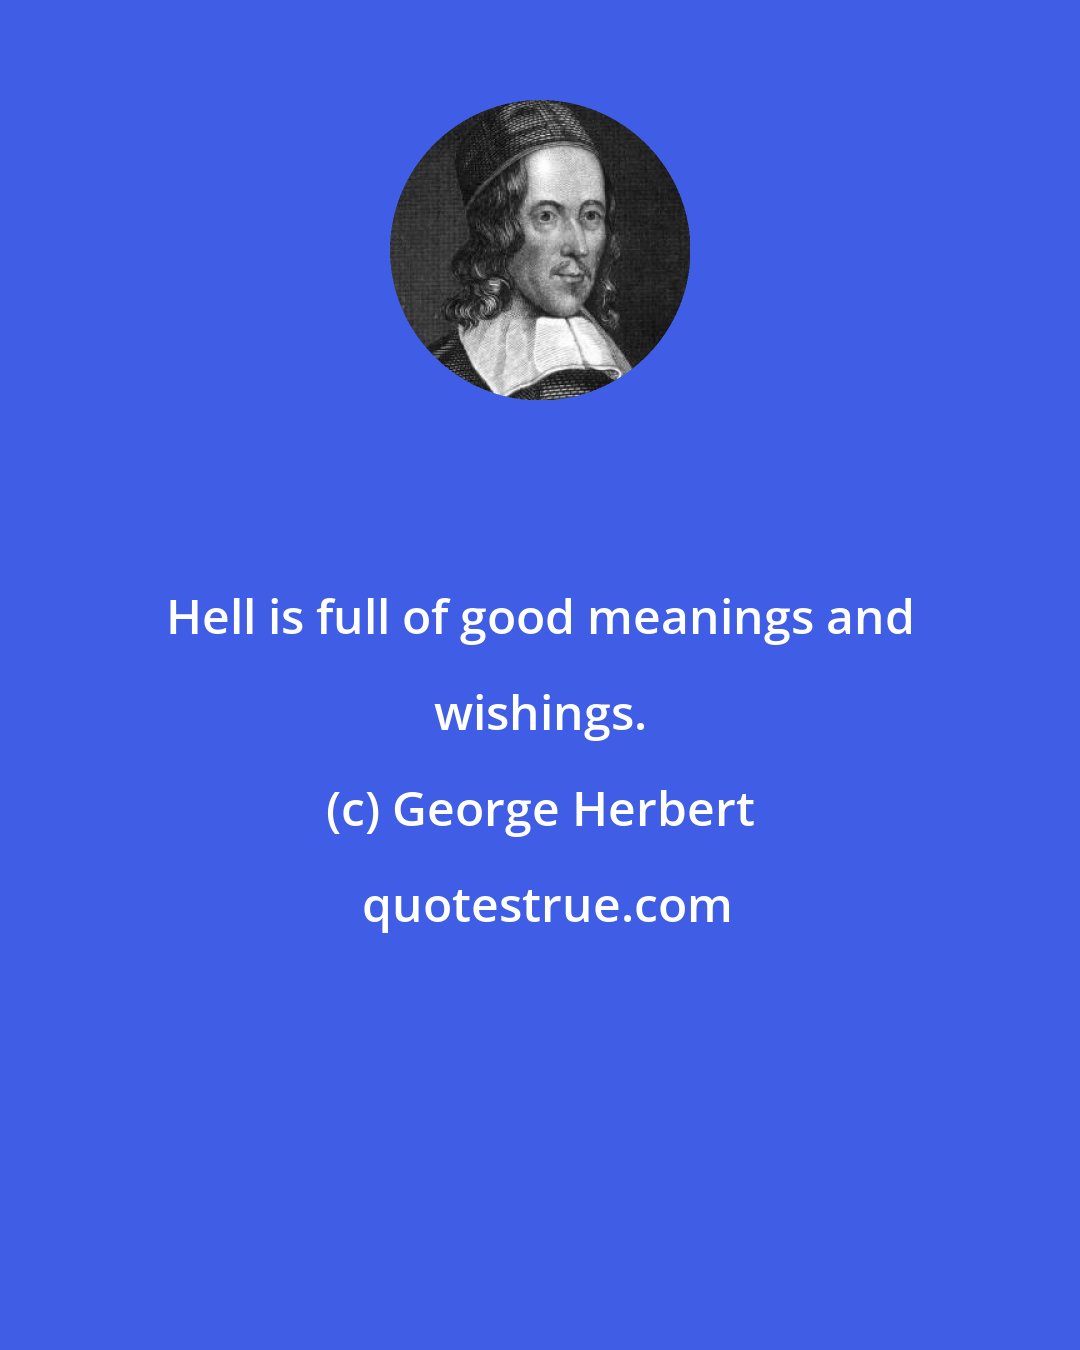 George Herbert: Hell is full of good meanings and wishings.